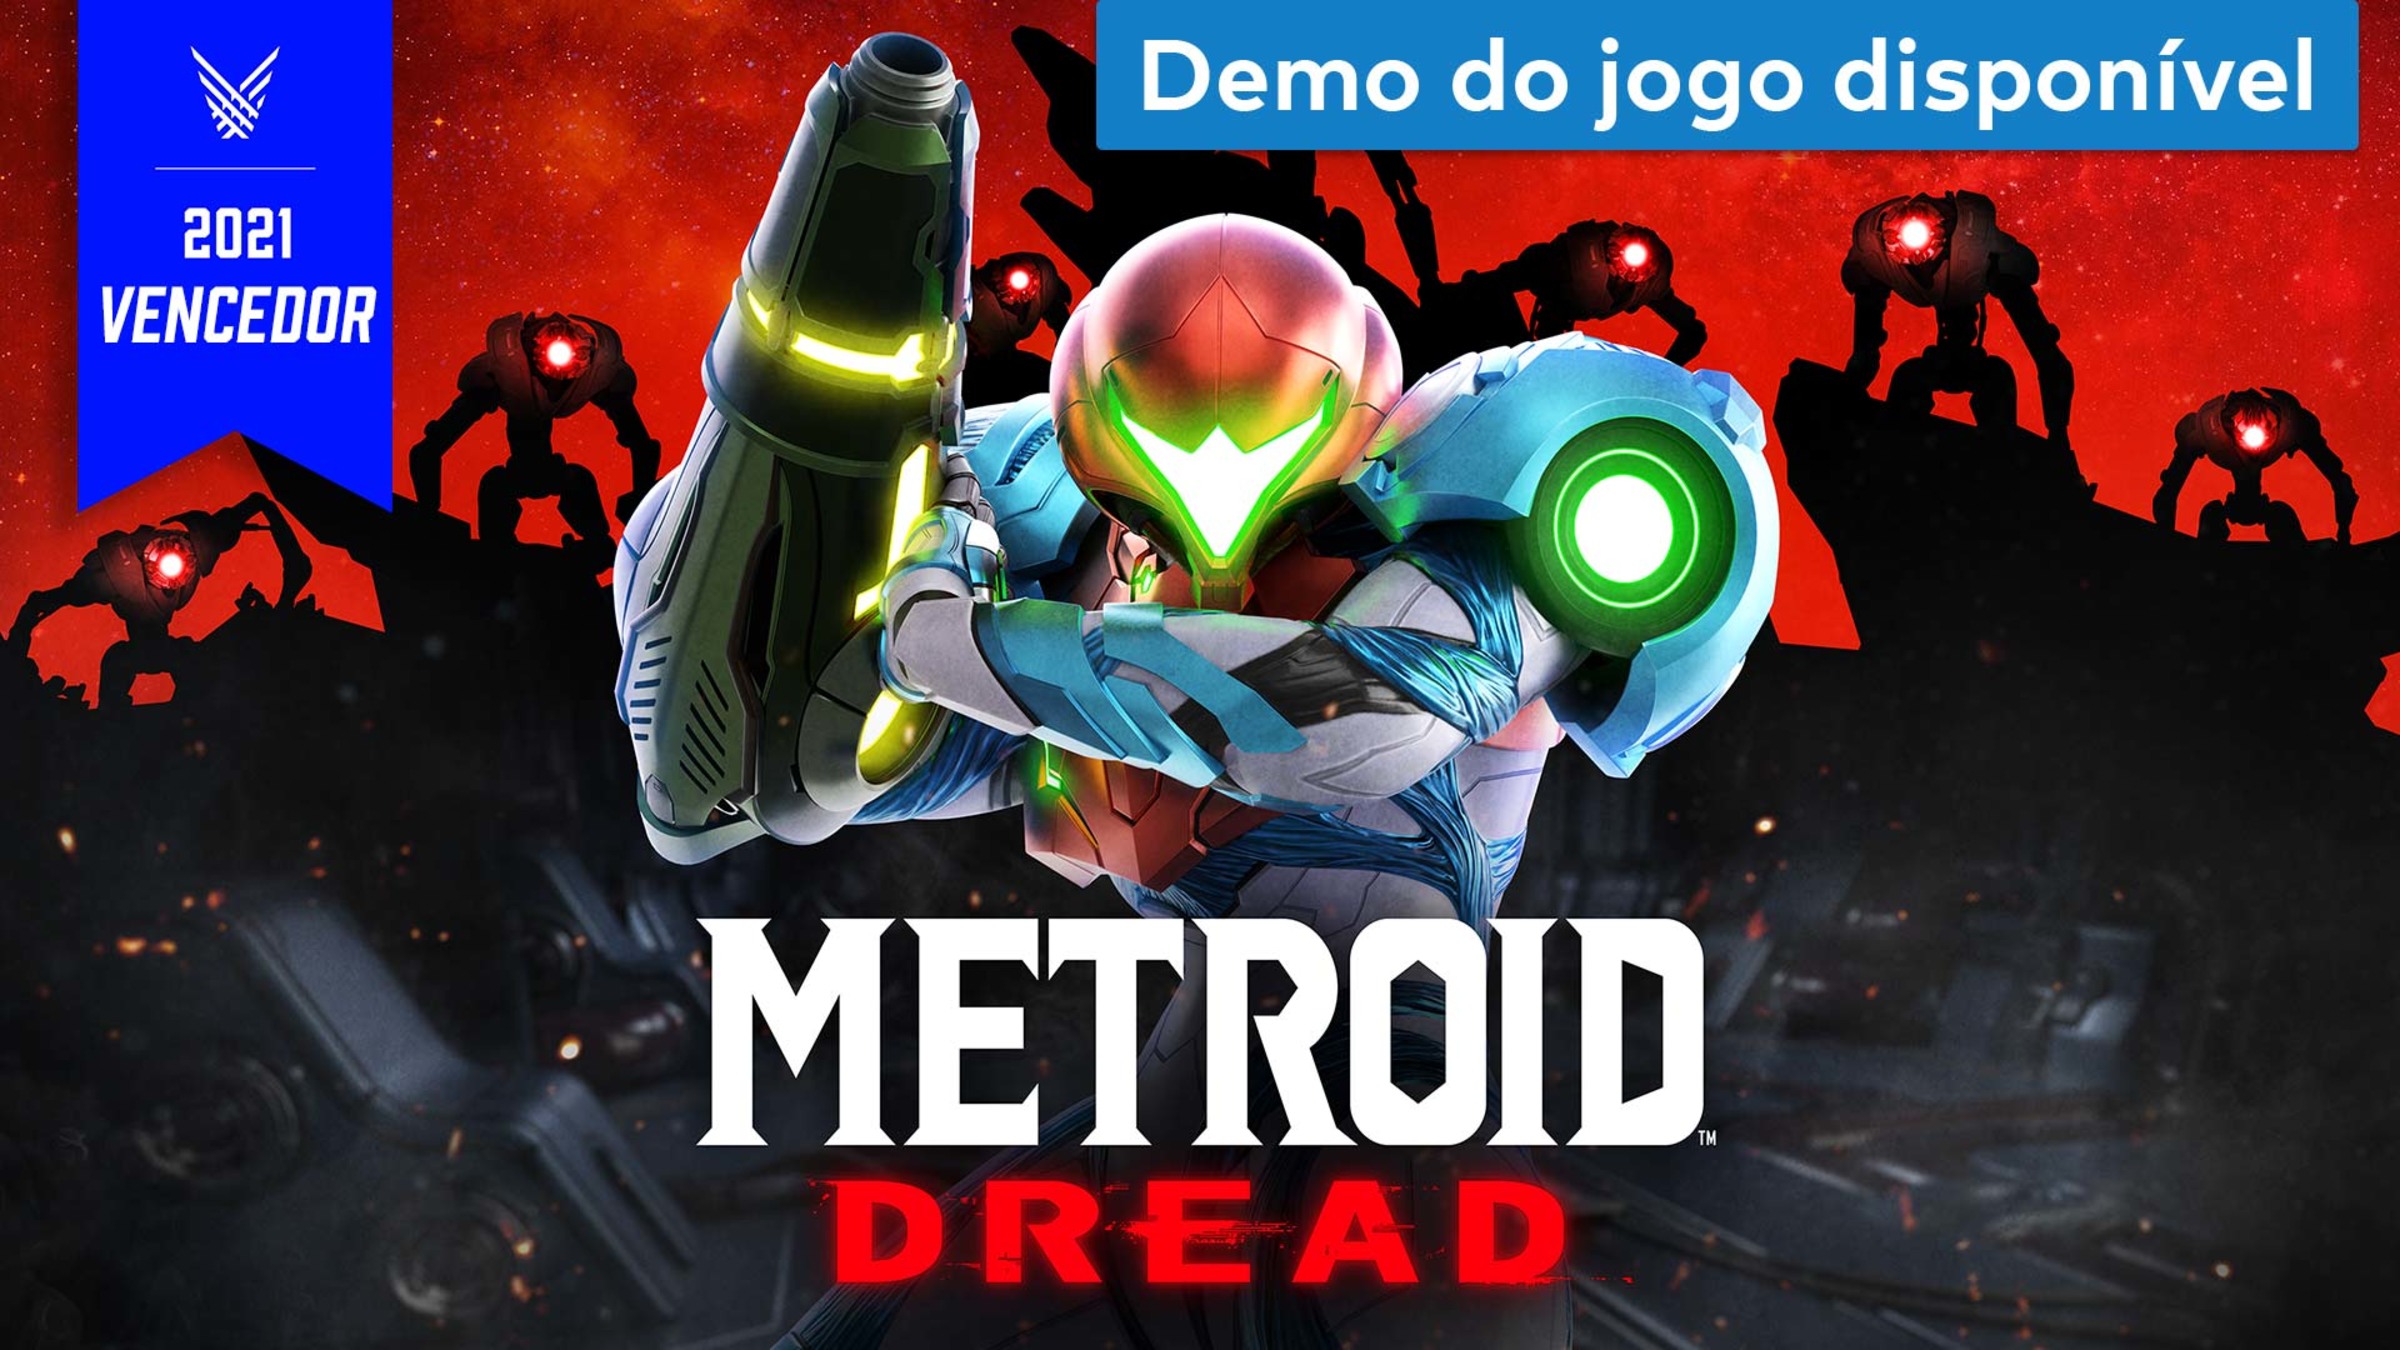 Jogo Metroid Dread - Nintendo Switch